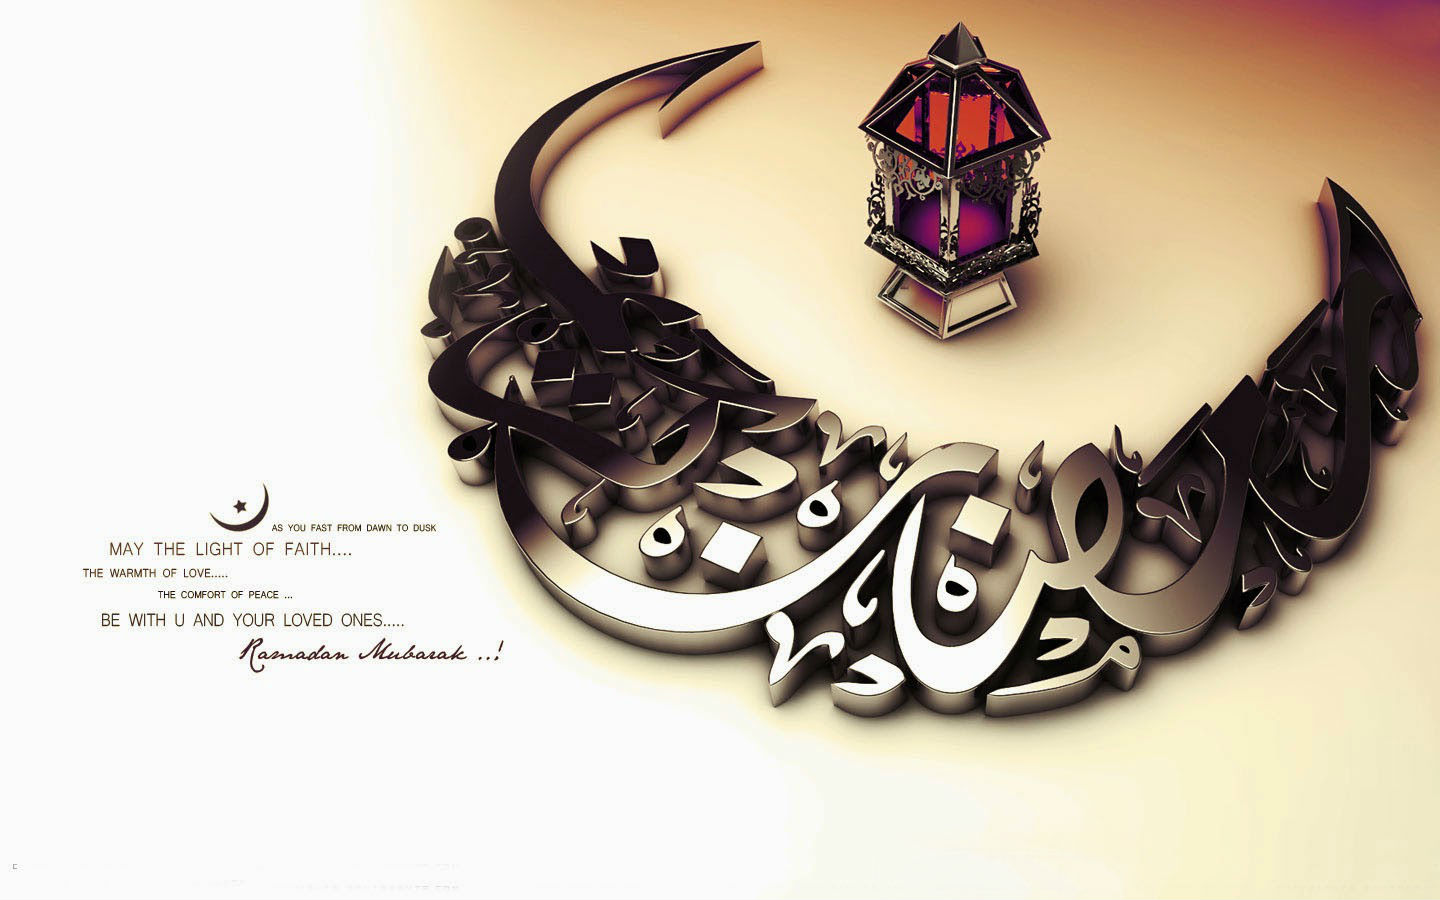 50+] Ramadan Mubarak In Arabic Wallpapers 2015 - WallpaperSafari